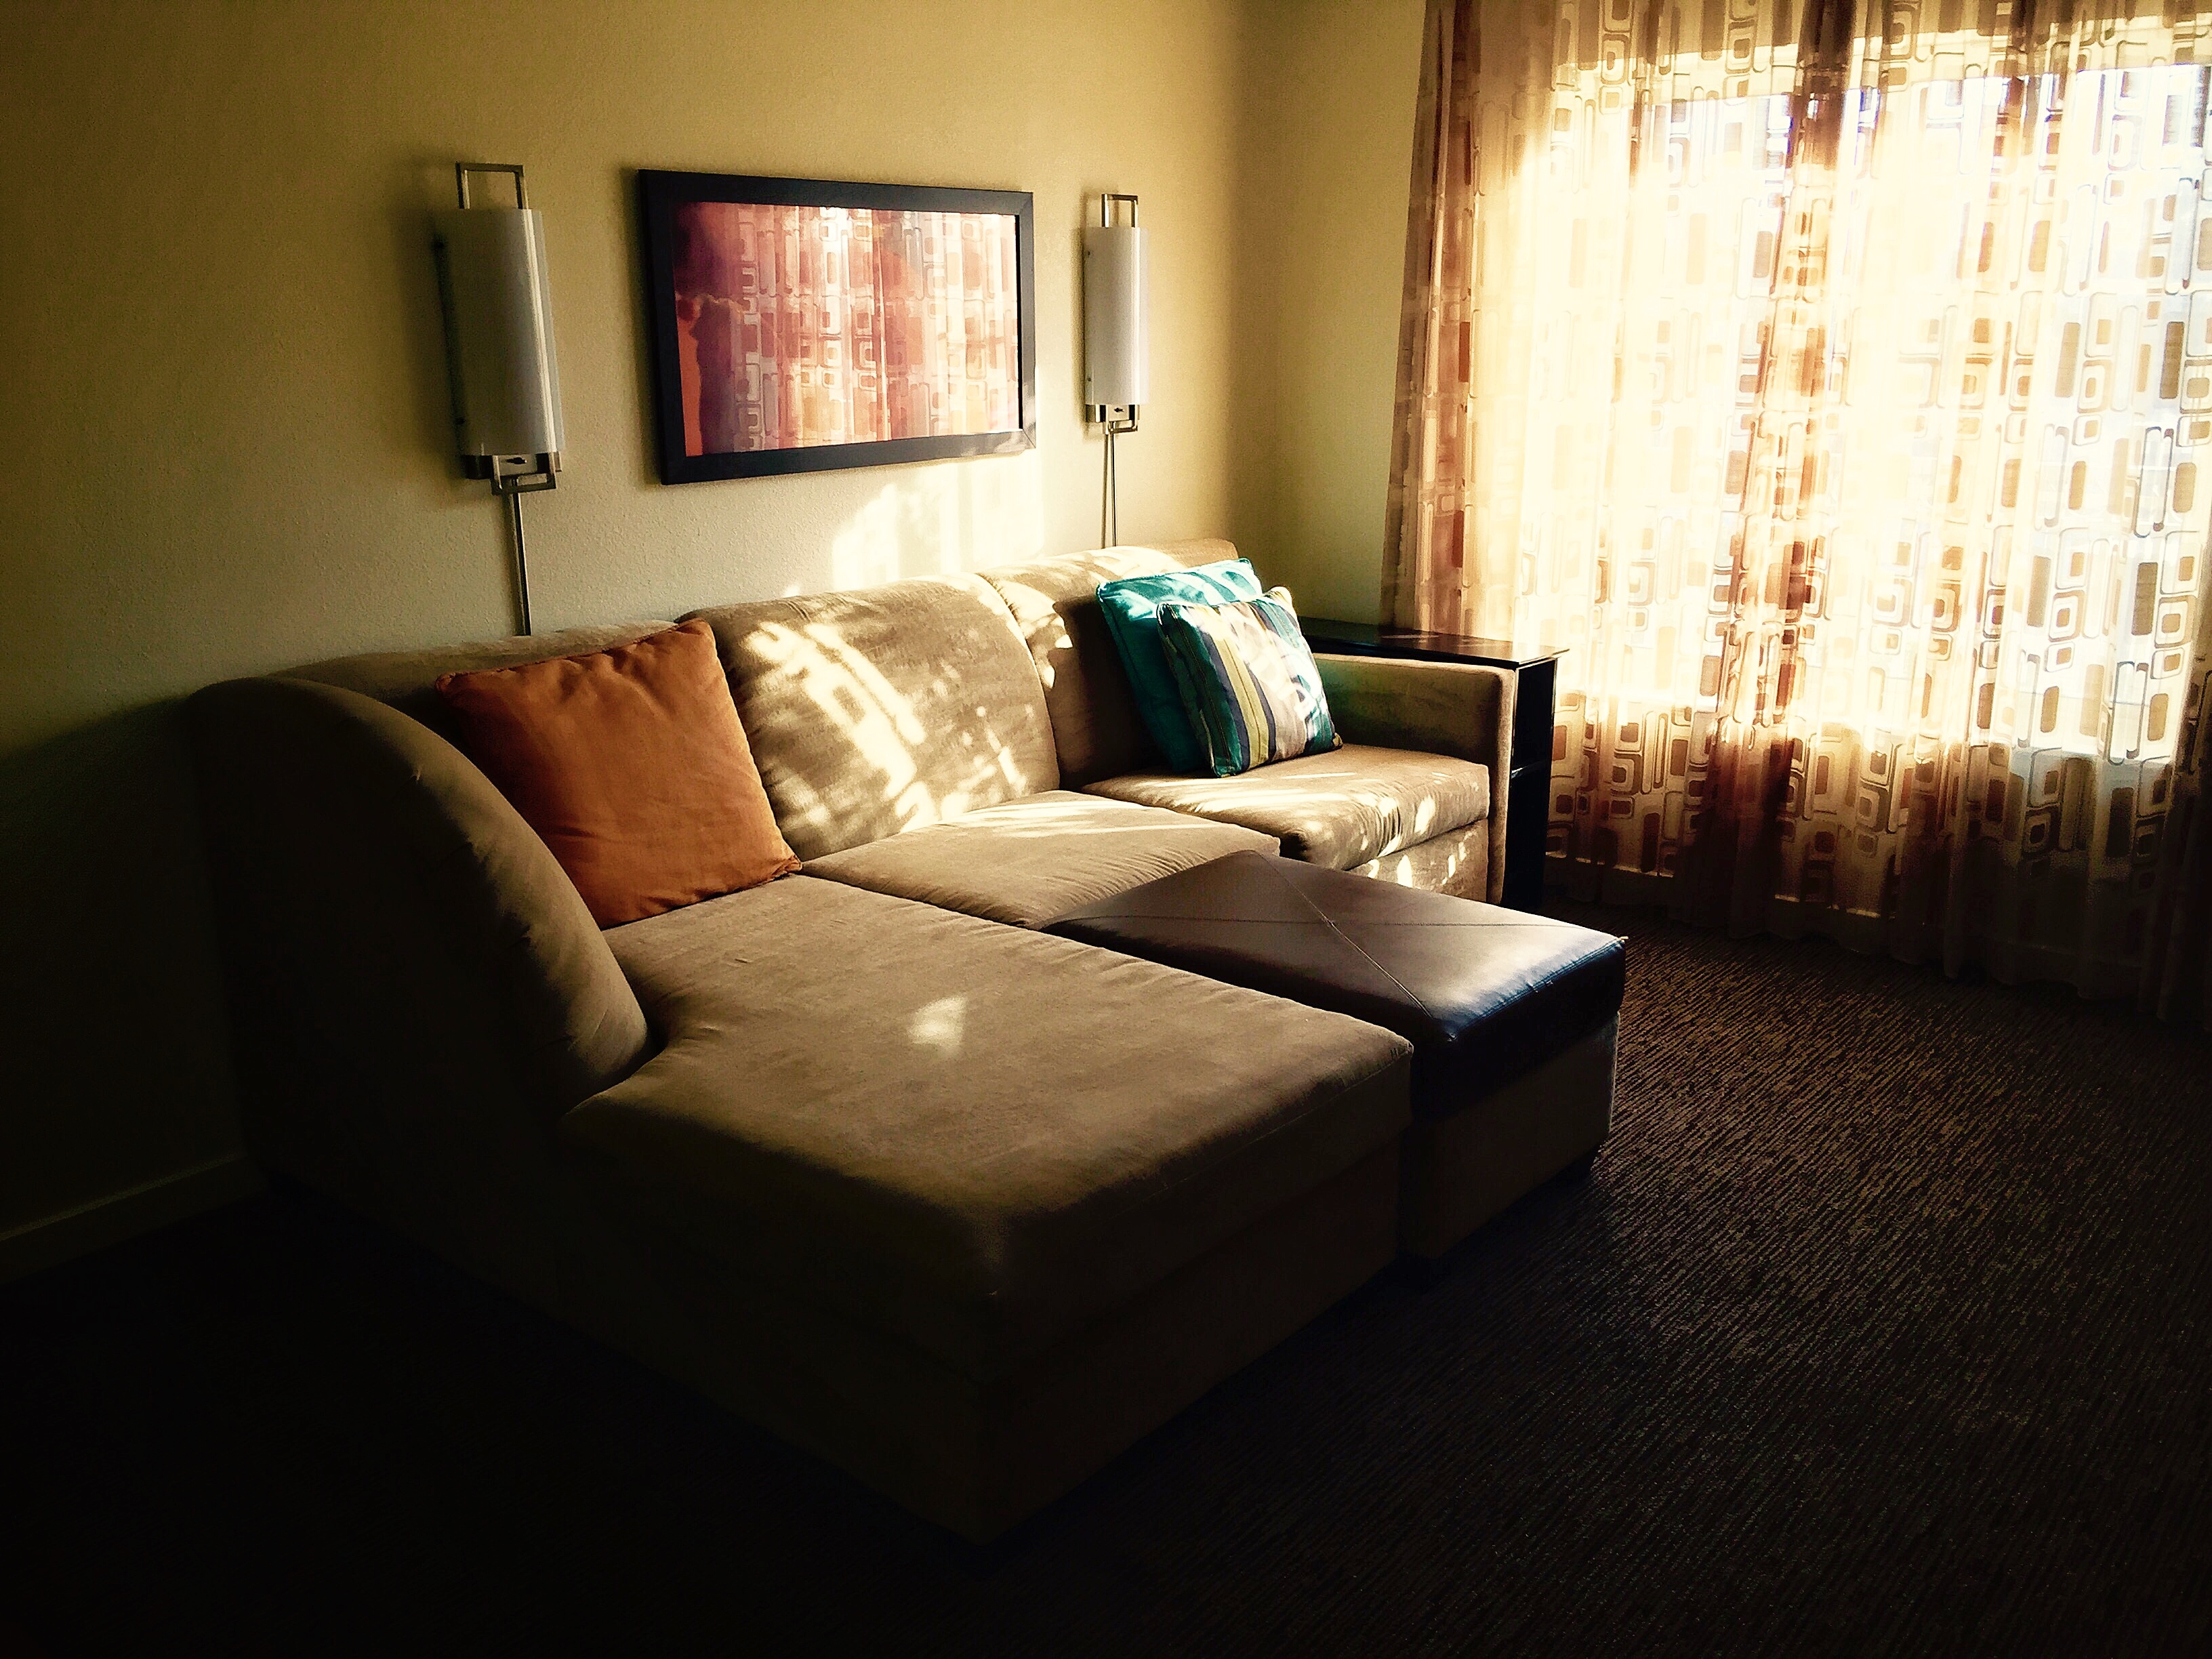 Horizontal Wallpaper man made, room, cushion, light, ottoman, sofa